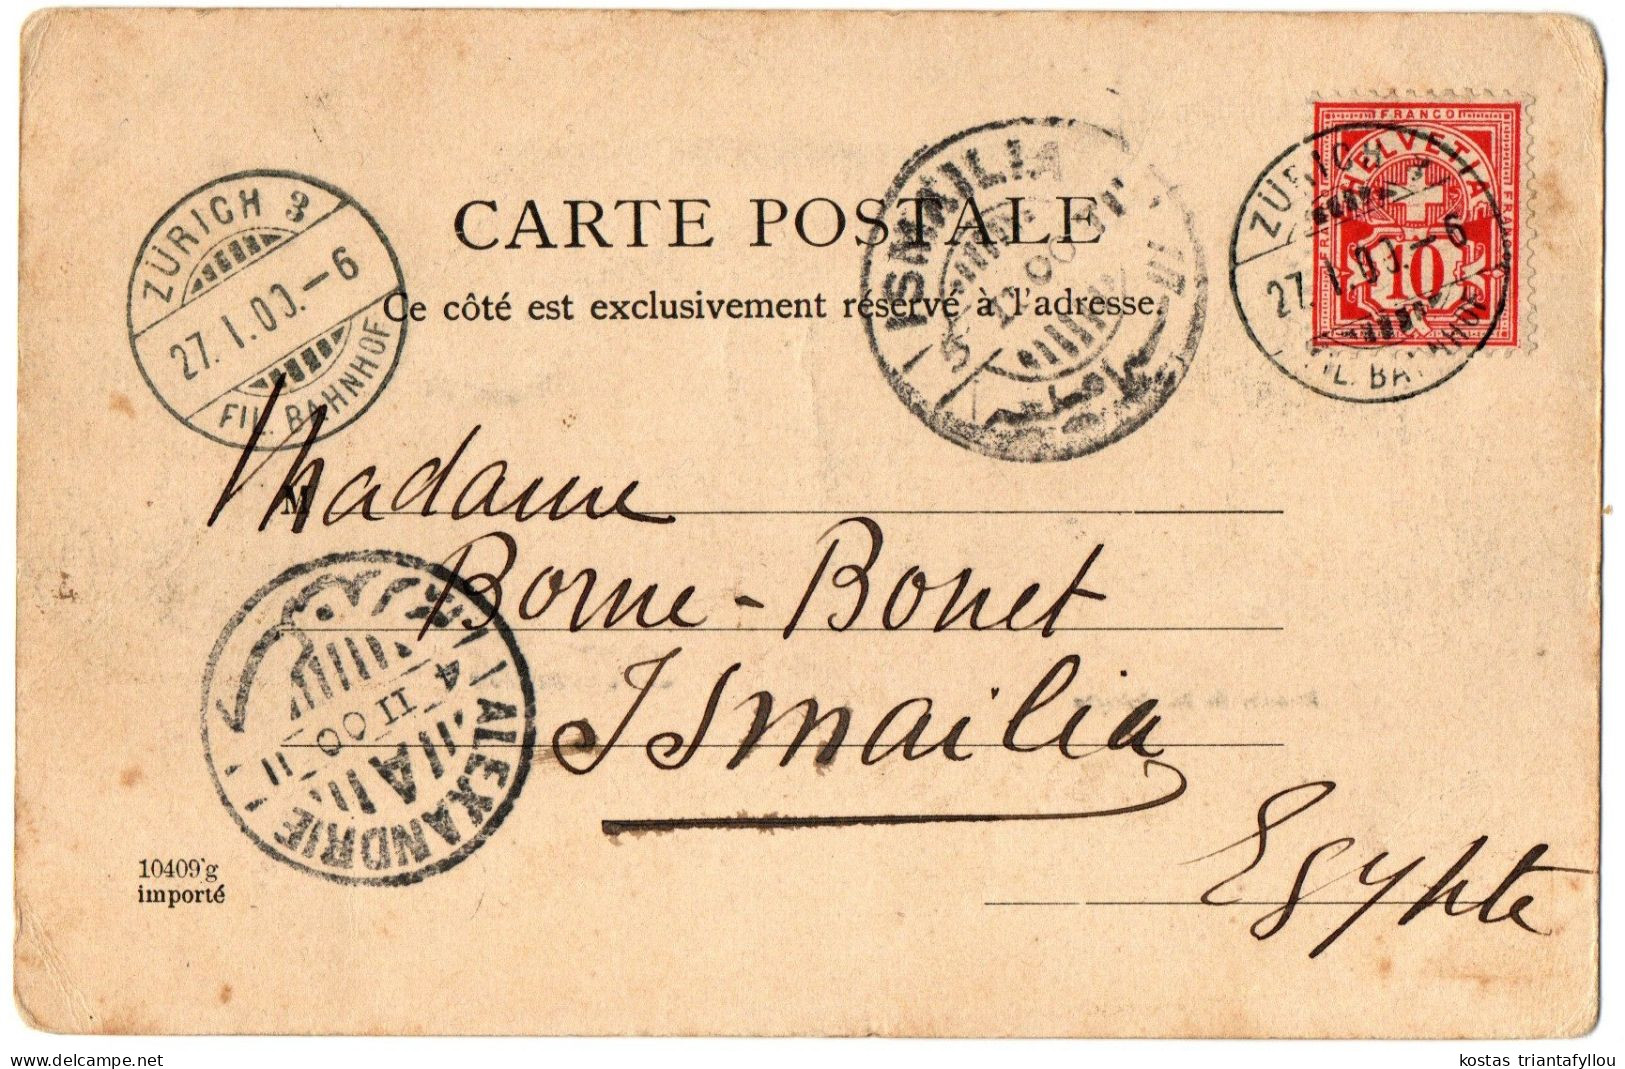 1.8.8 FRANCE, MARSEILLE, BASSIN DE LA JOLIETTE, 1900, POSTCARD - Joliette